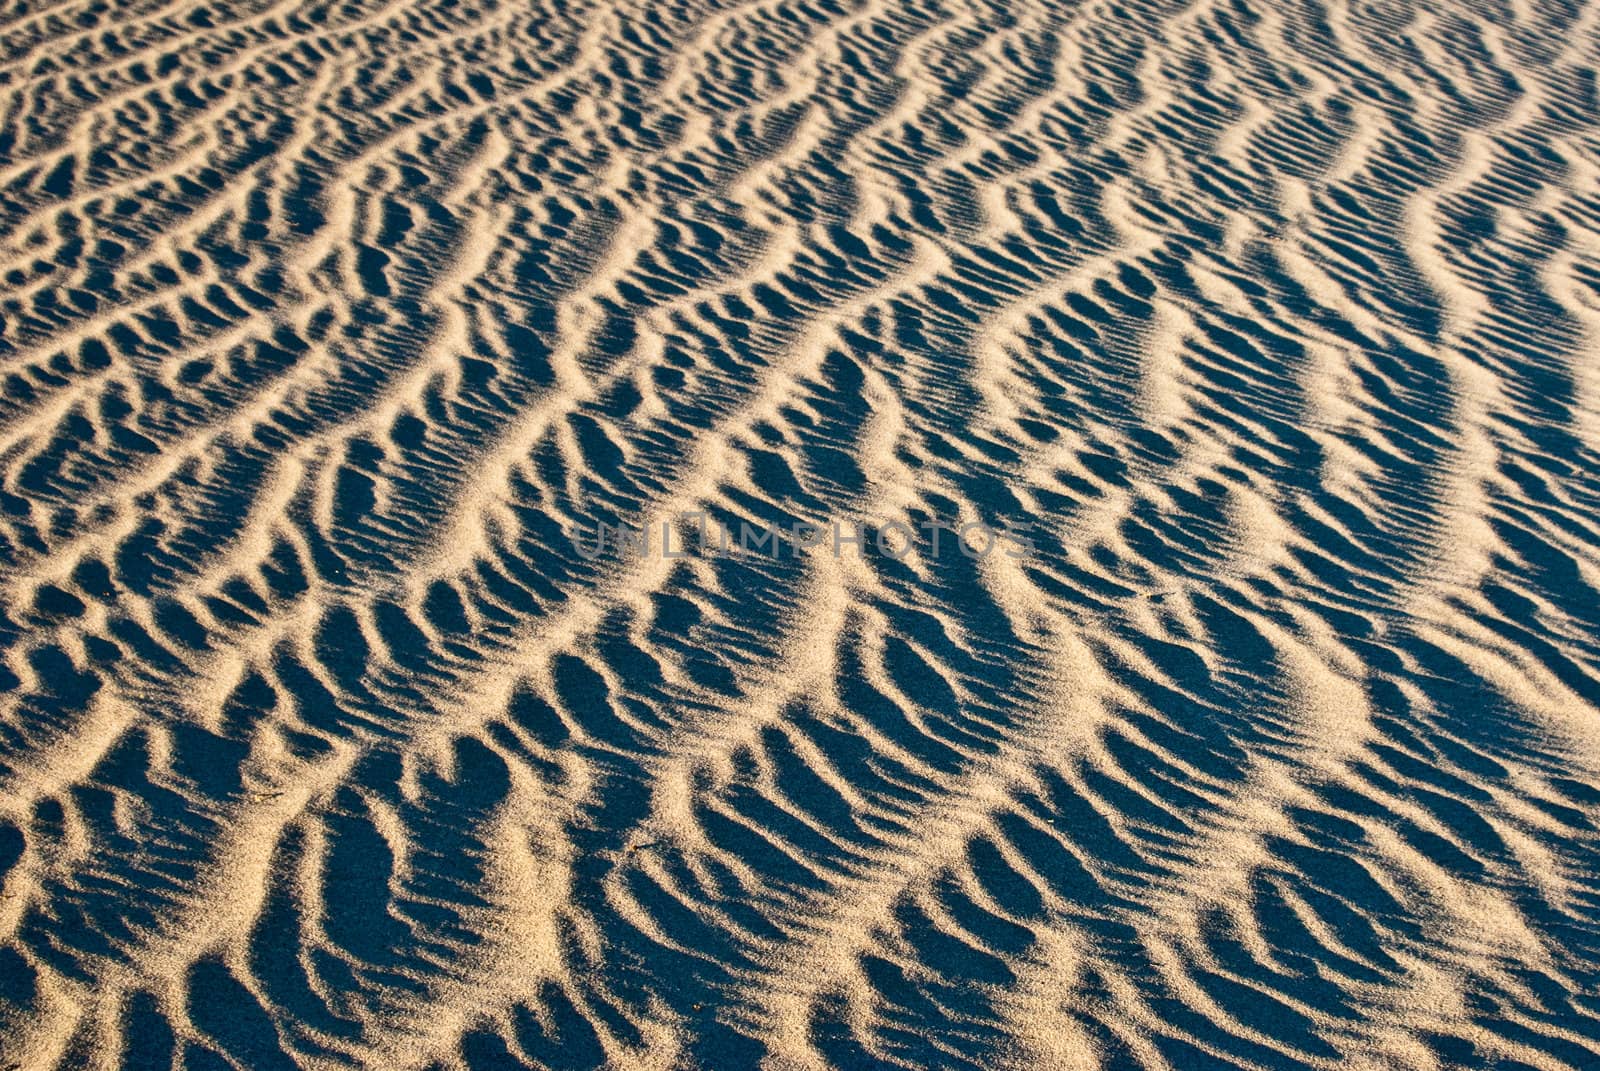 Sand Ridges by emattil